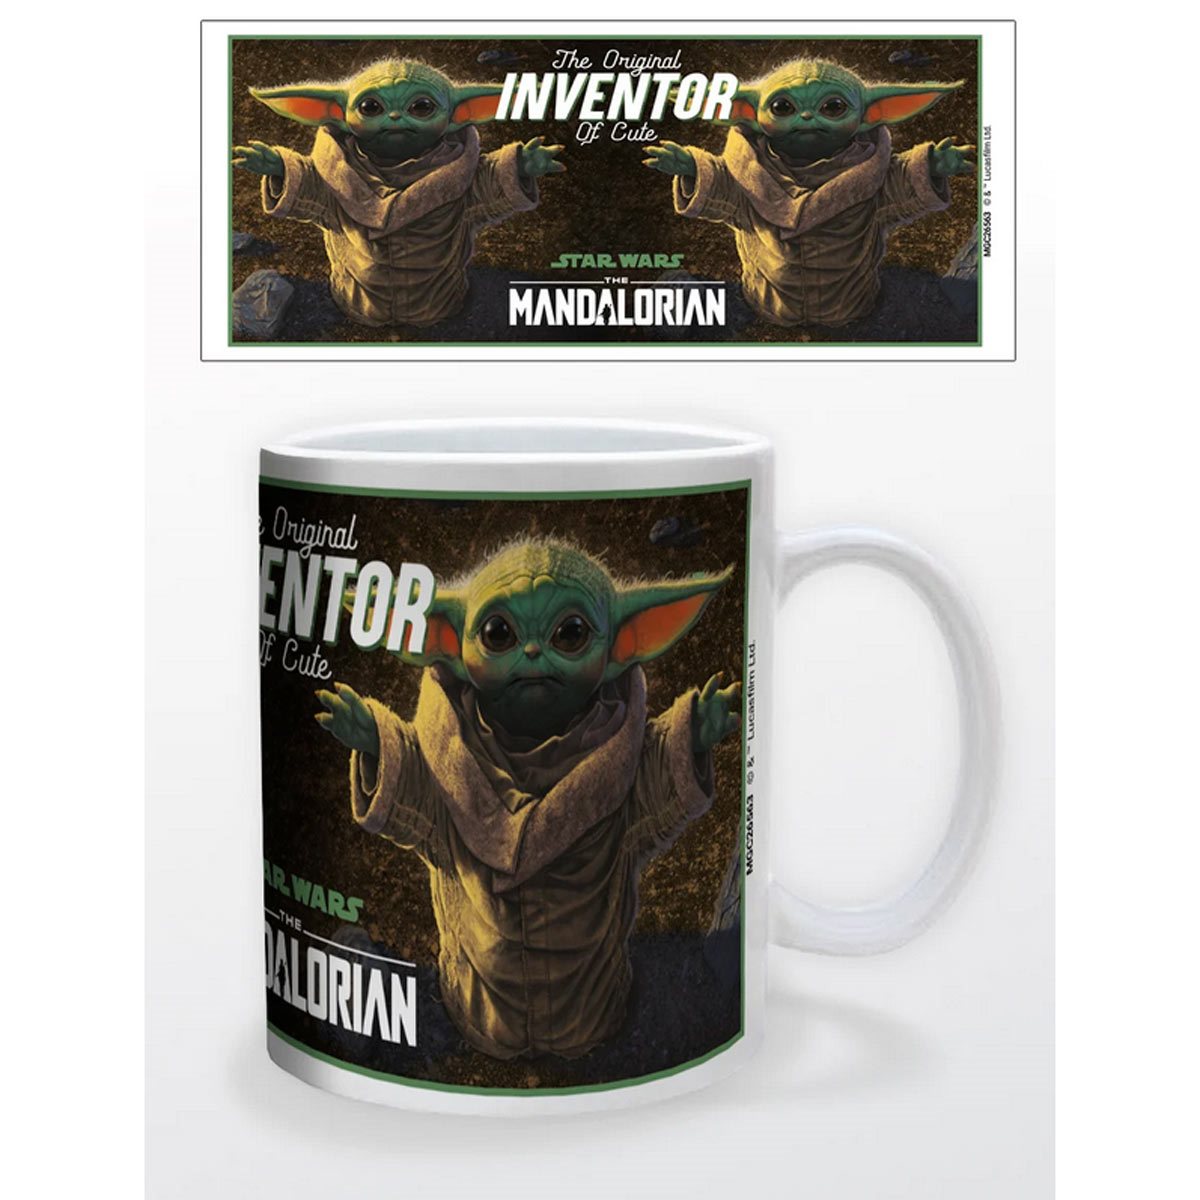 Mandalorian Of Original The oz. Inventor Cute Mug Star 11 Wars: The